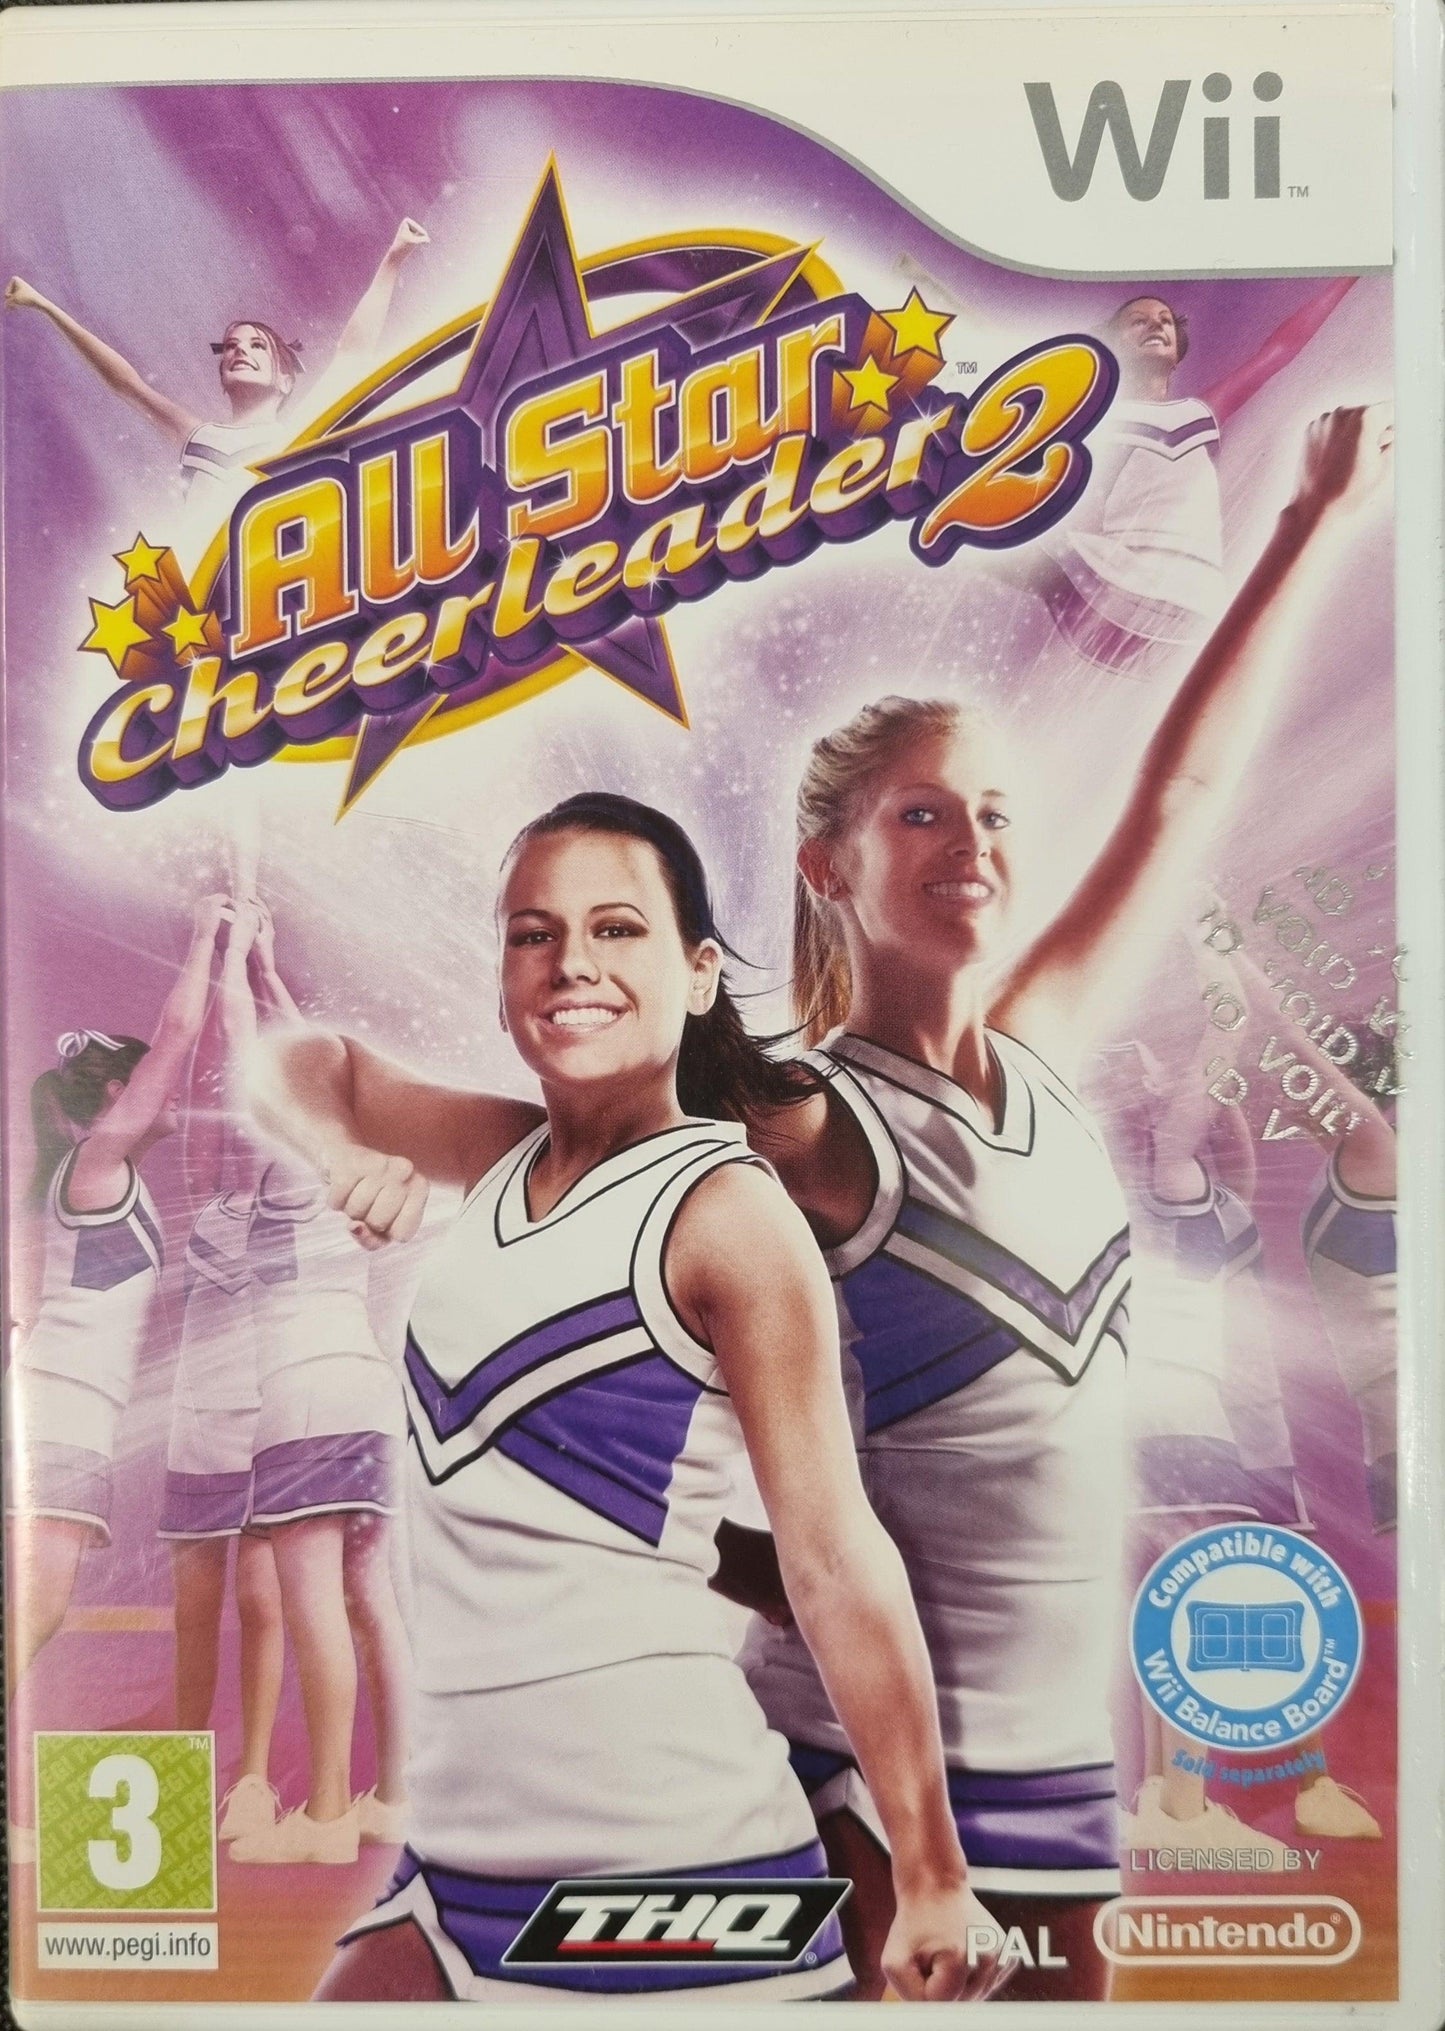 All Star Cheerleader 2 - ZZGames.dk